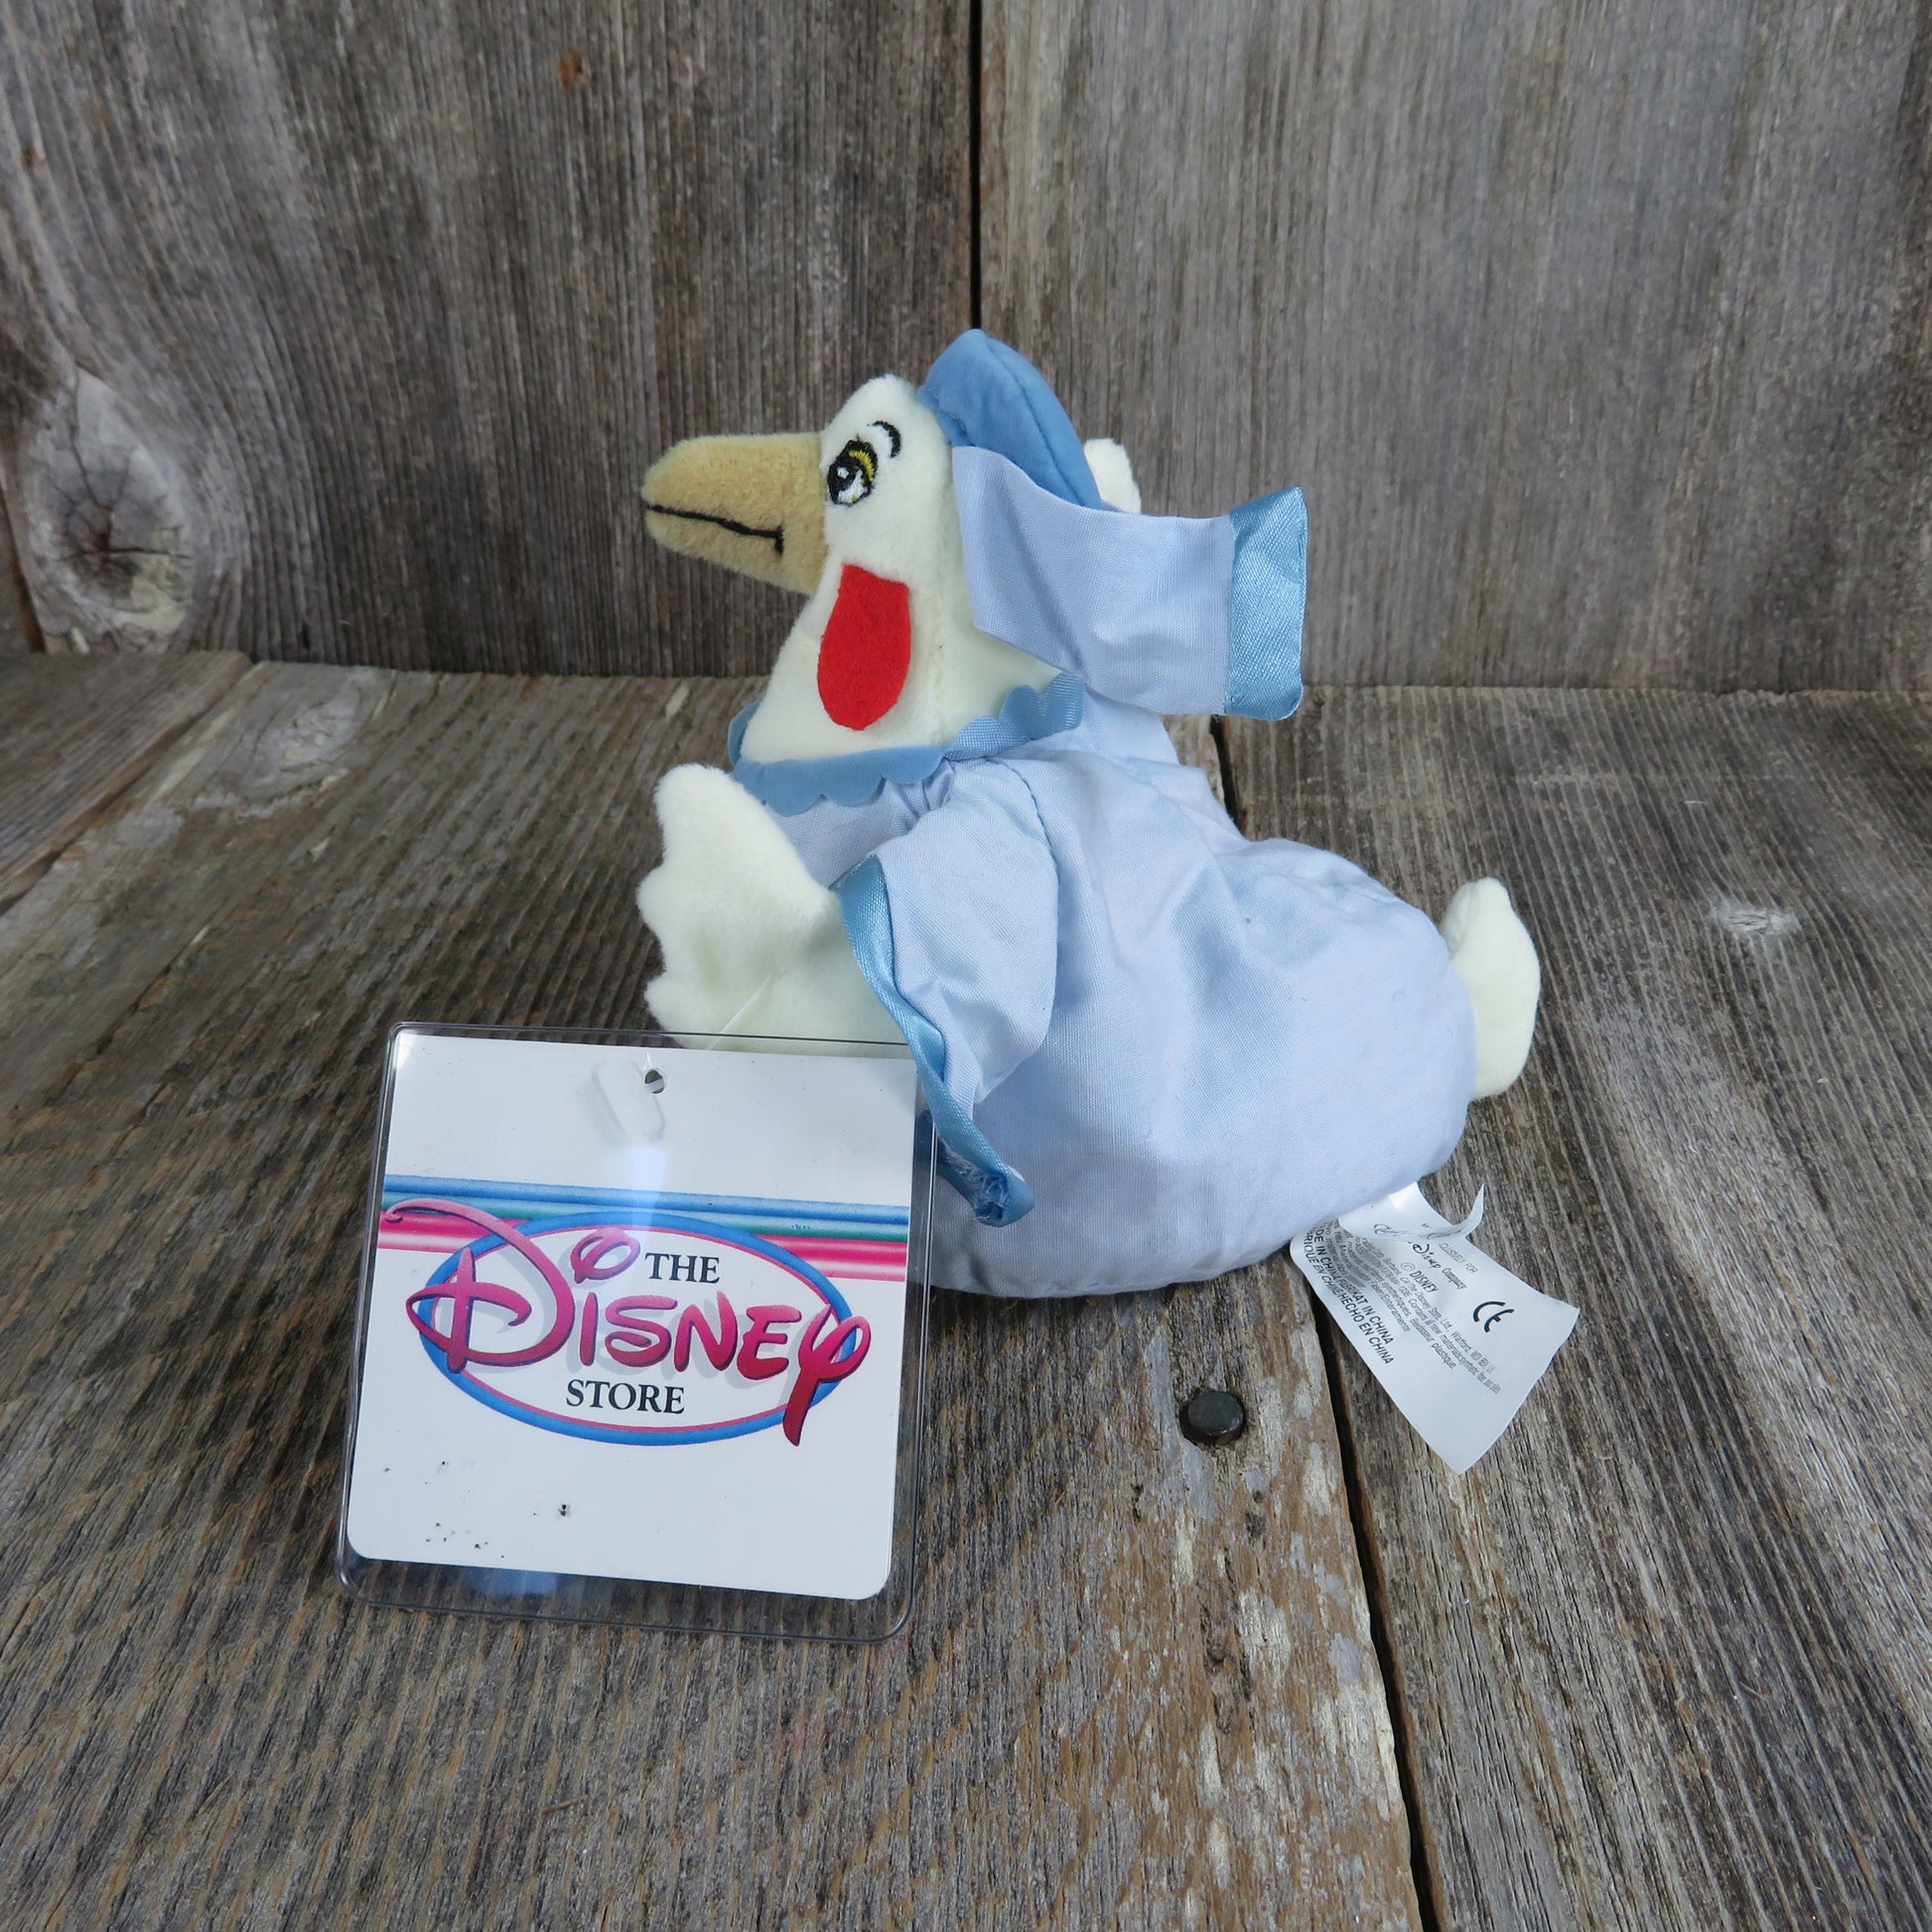 Vintage Lady Kluck Chicken Plush Bean Bag Robin Hood Disney Store Beanie Stuffed Animal 1990s - At Grandma's Table